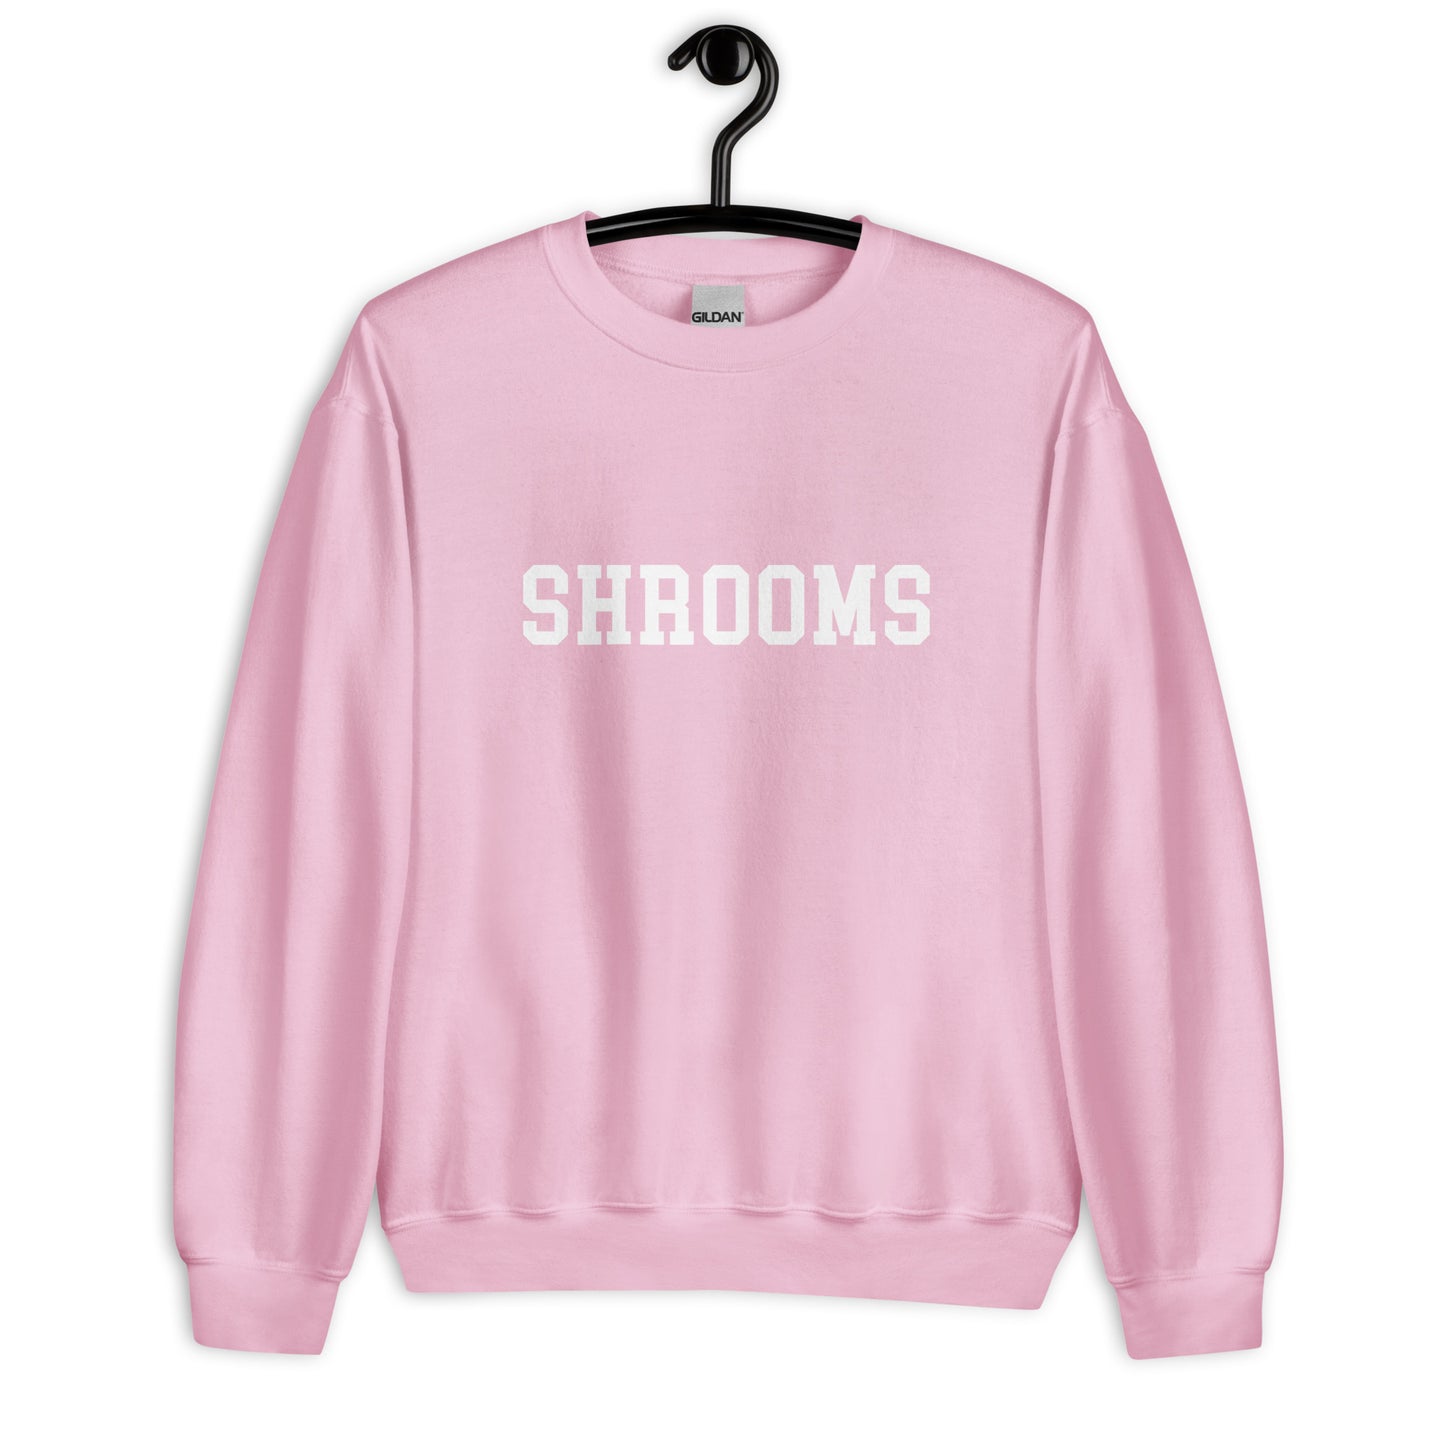 Shrooms Sweatshirt - Straight Font